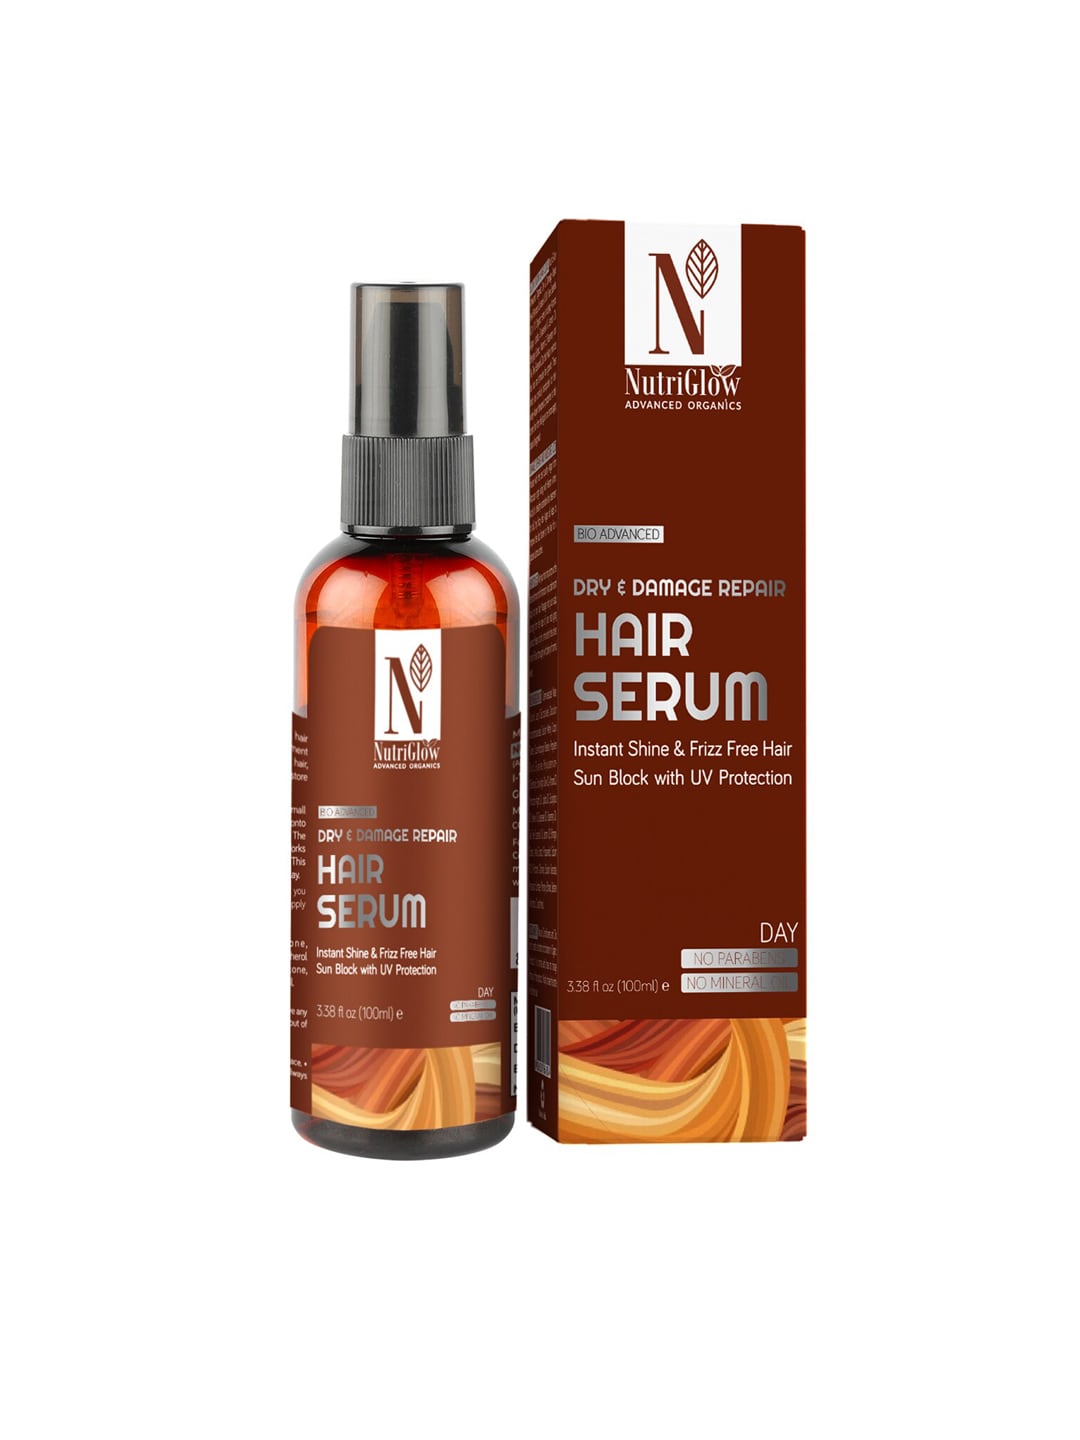 Nutriglow Advanced Organics Dry & Damage Hair Repair Serum - 100ml Price in India